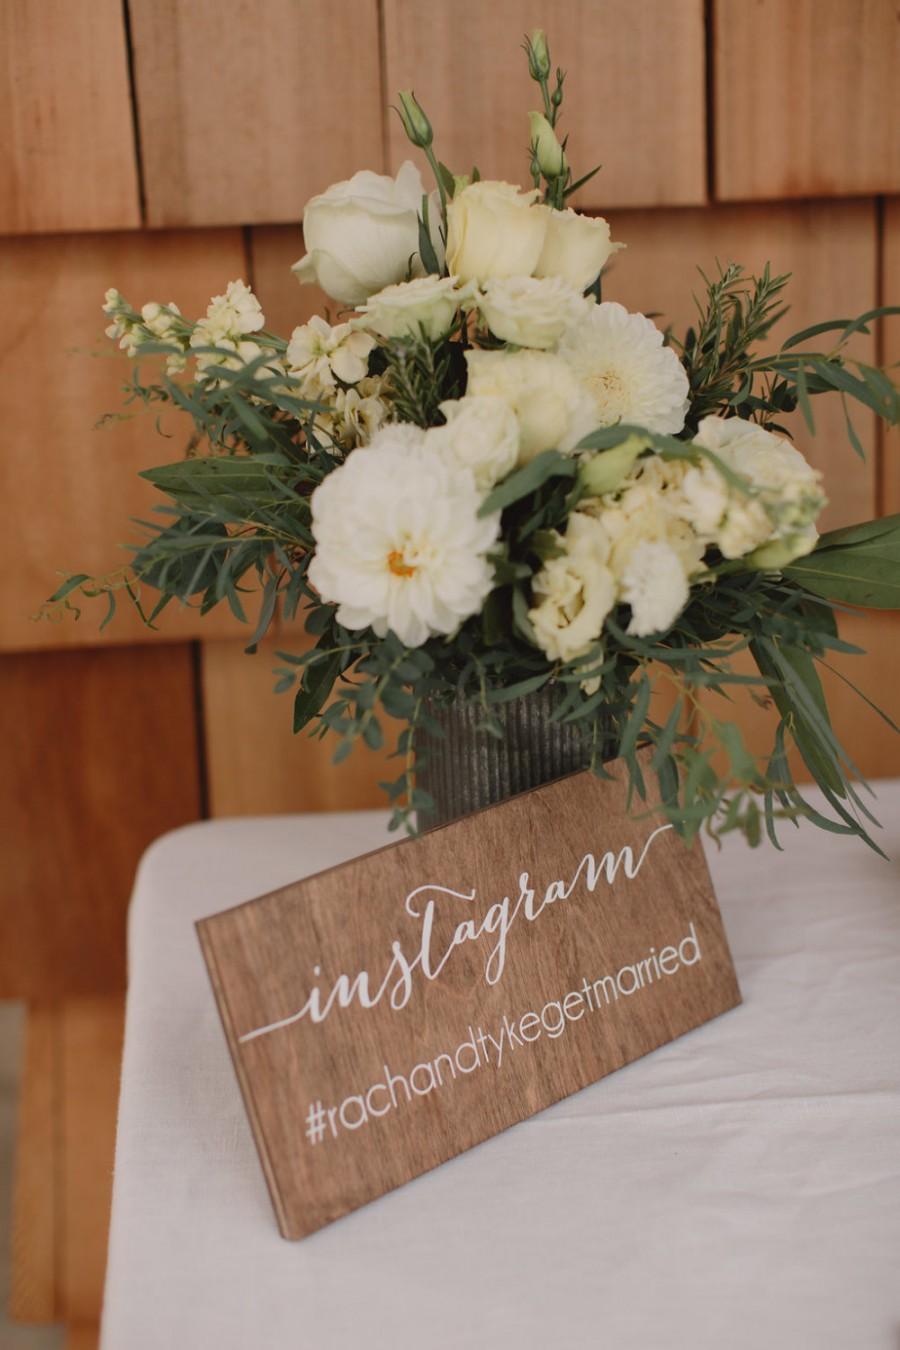 Wedding - Instagram - Social Media Sign - Hashtag - Wooden Wedding Signs - Wood